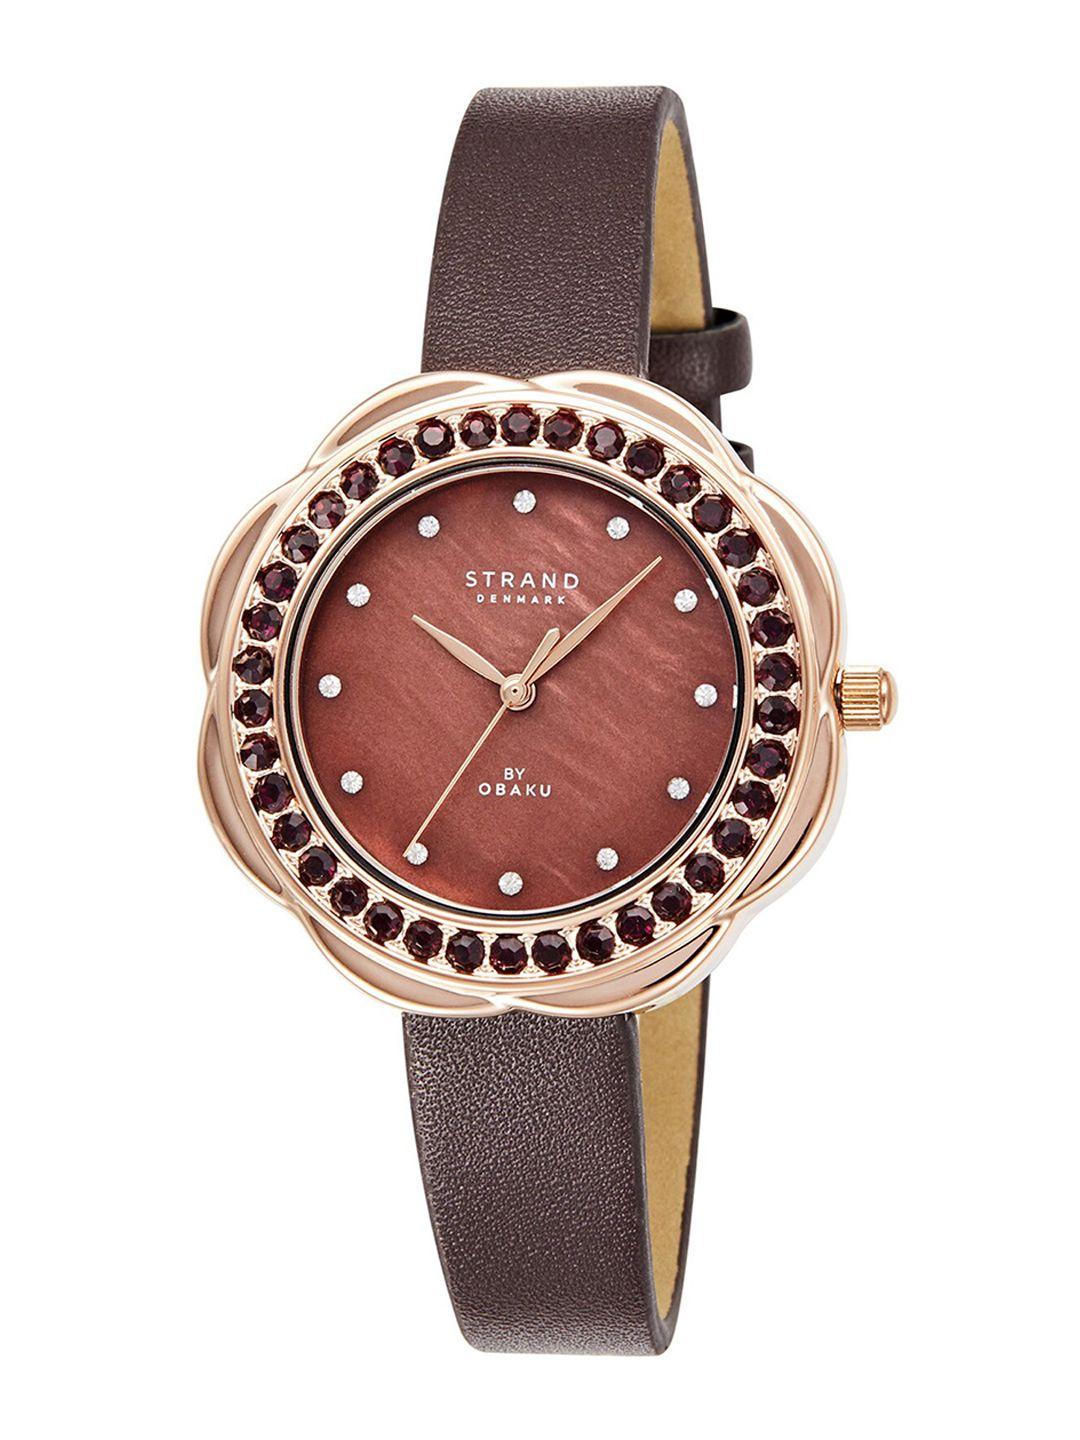 strand-by-obaku-women-brown-brass-patterned-dial-&-brown-bracelet-style-straps-digital-watch-s735lxvnvn-csn